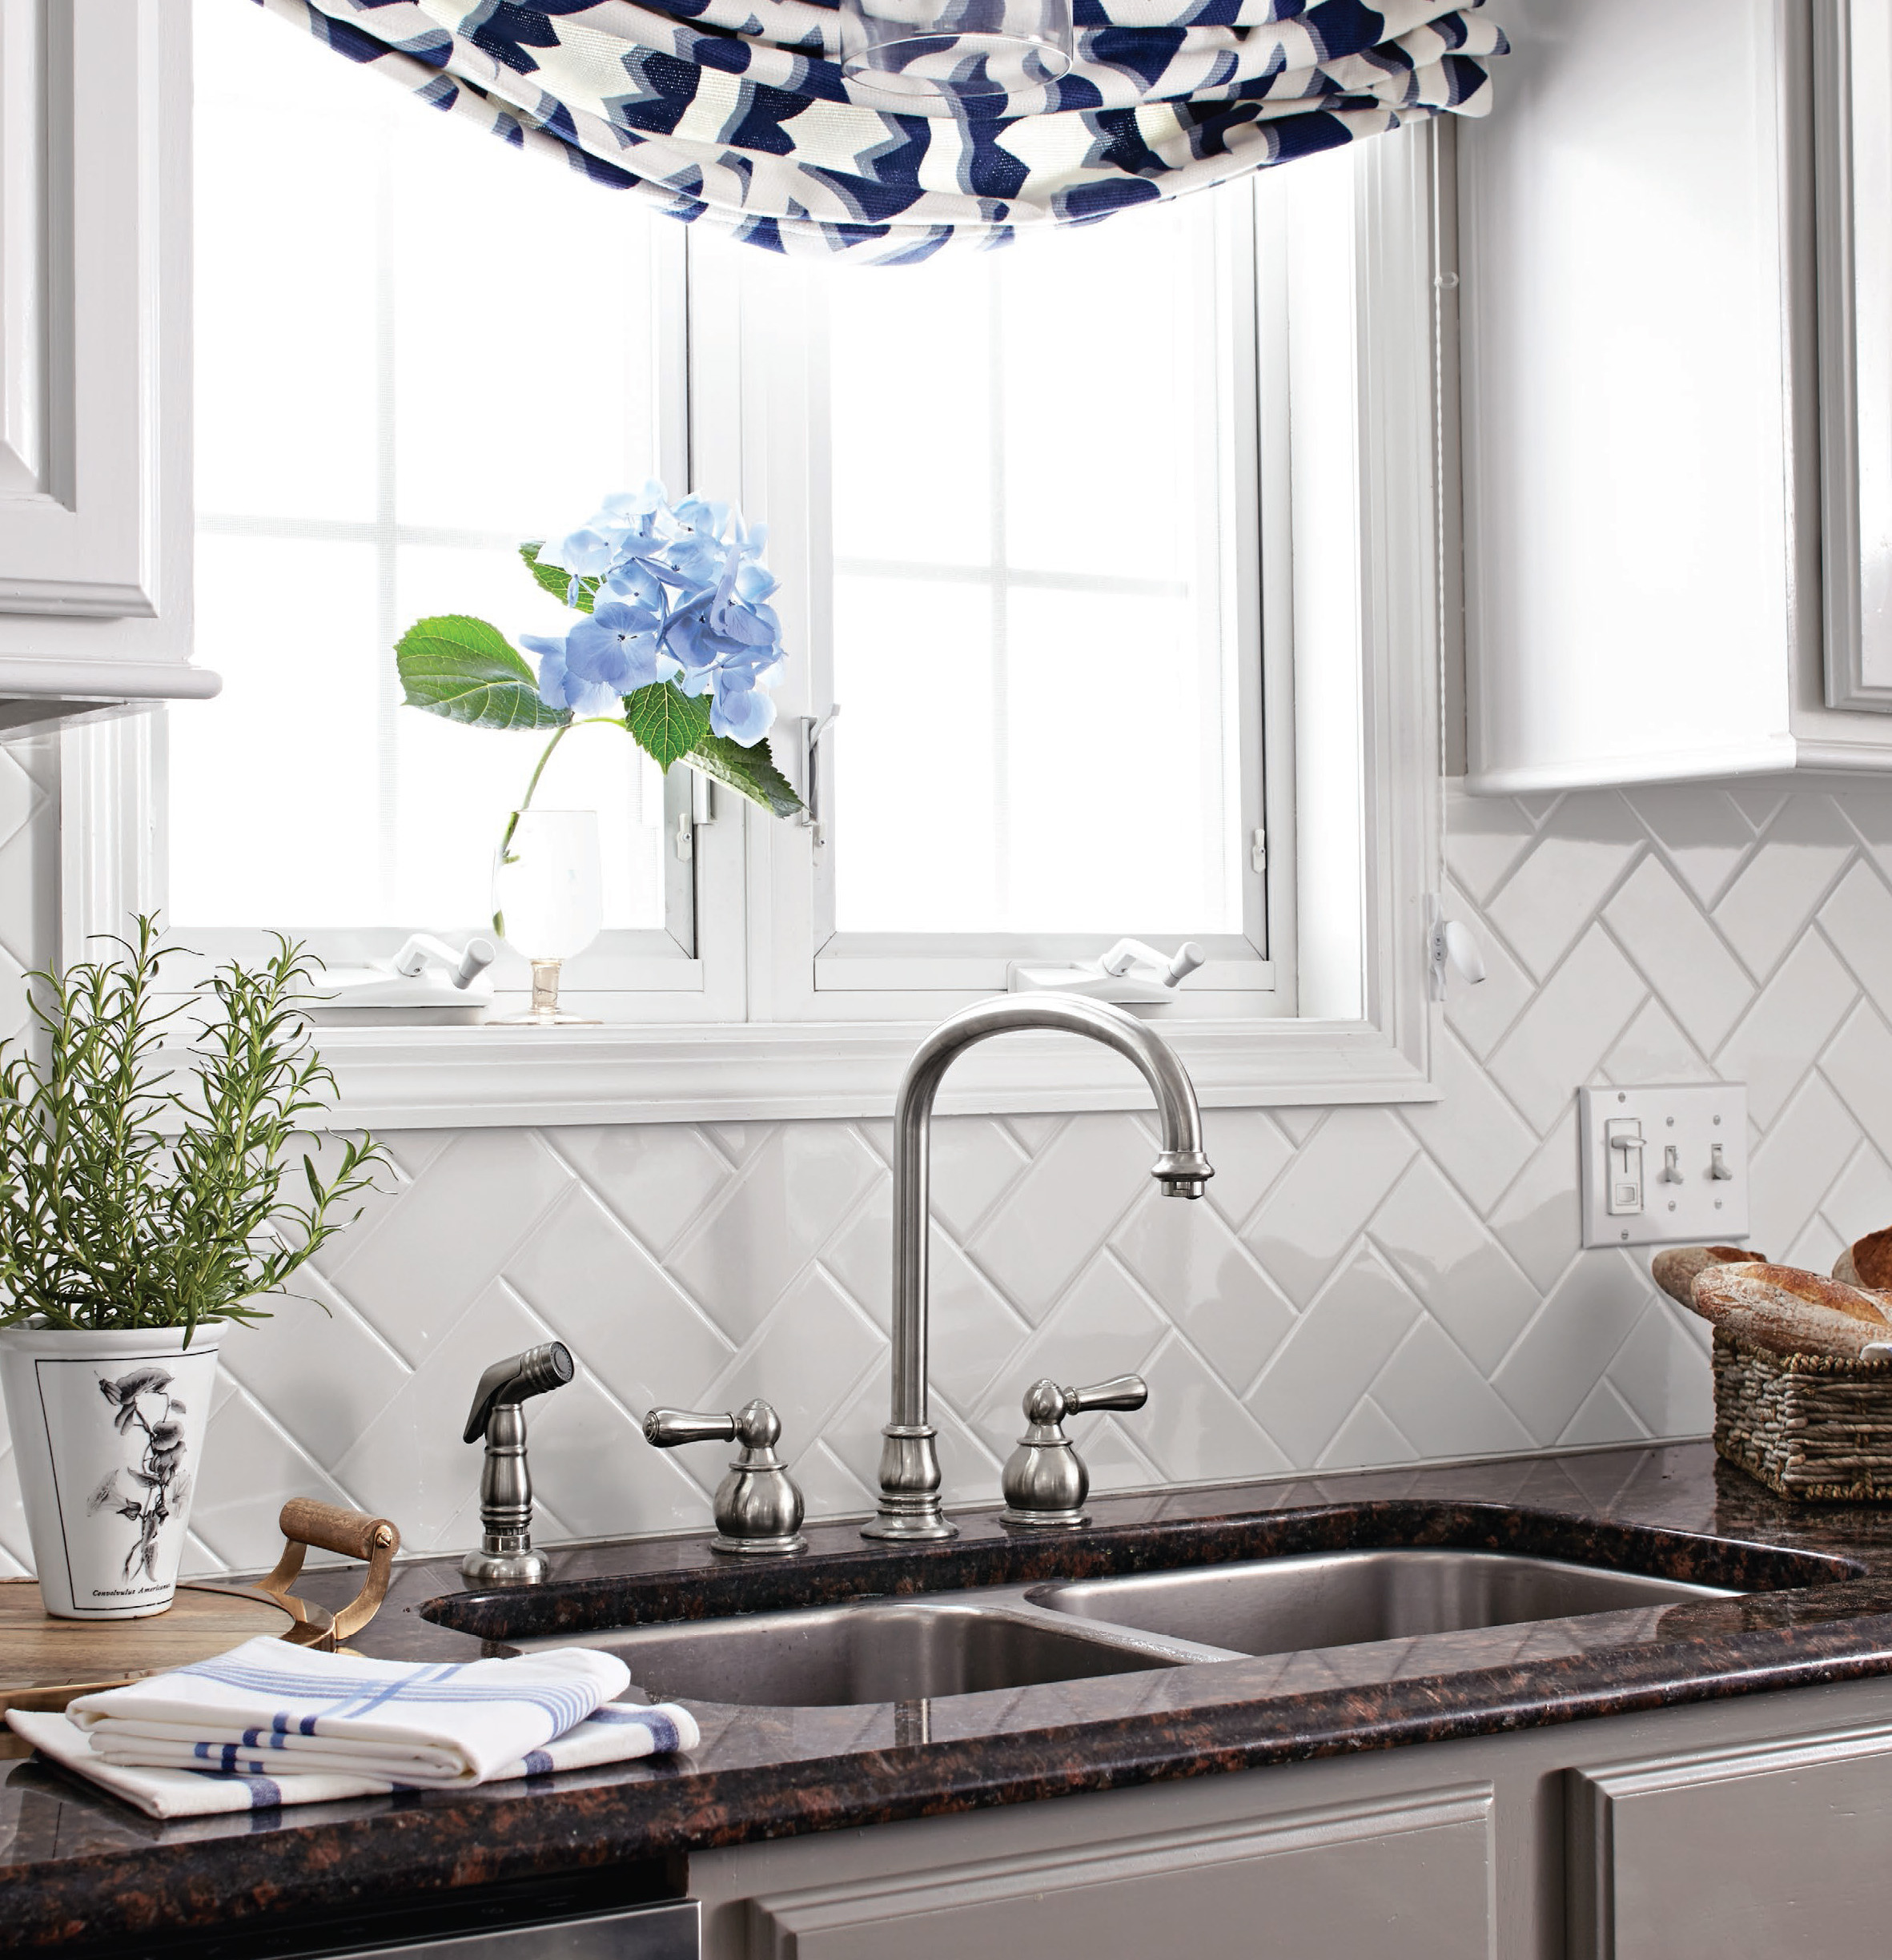 Kitchen Tile Backsplash Options + Inspirational Ideas